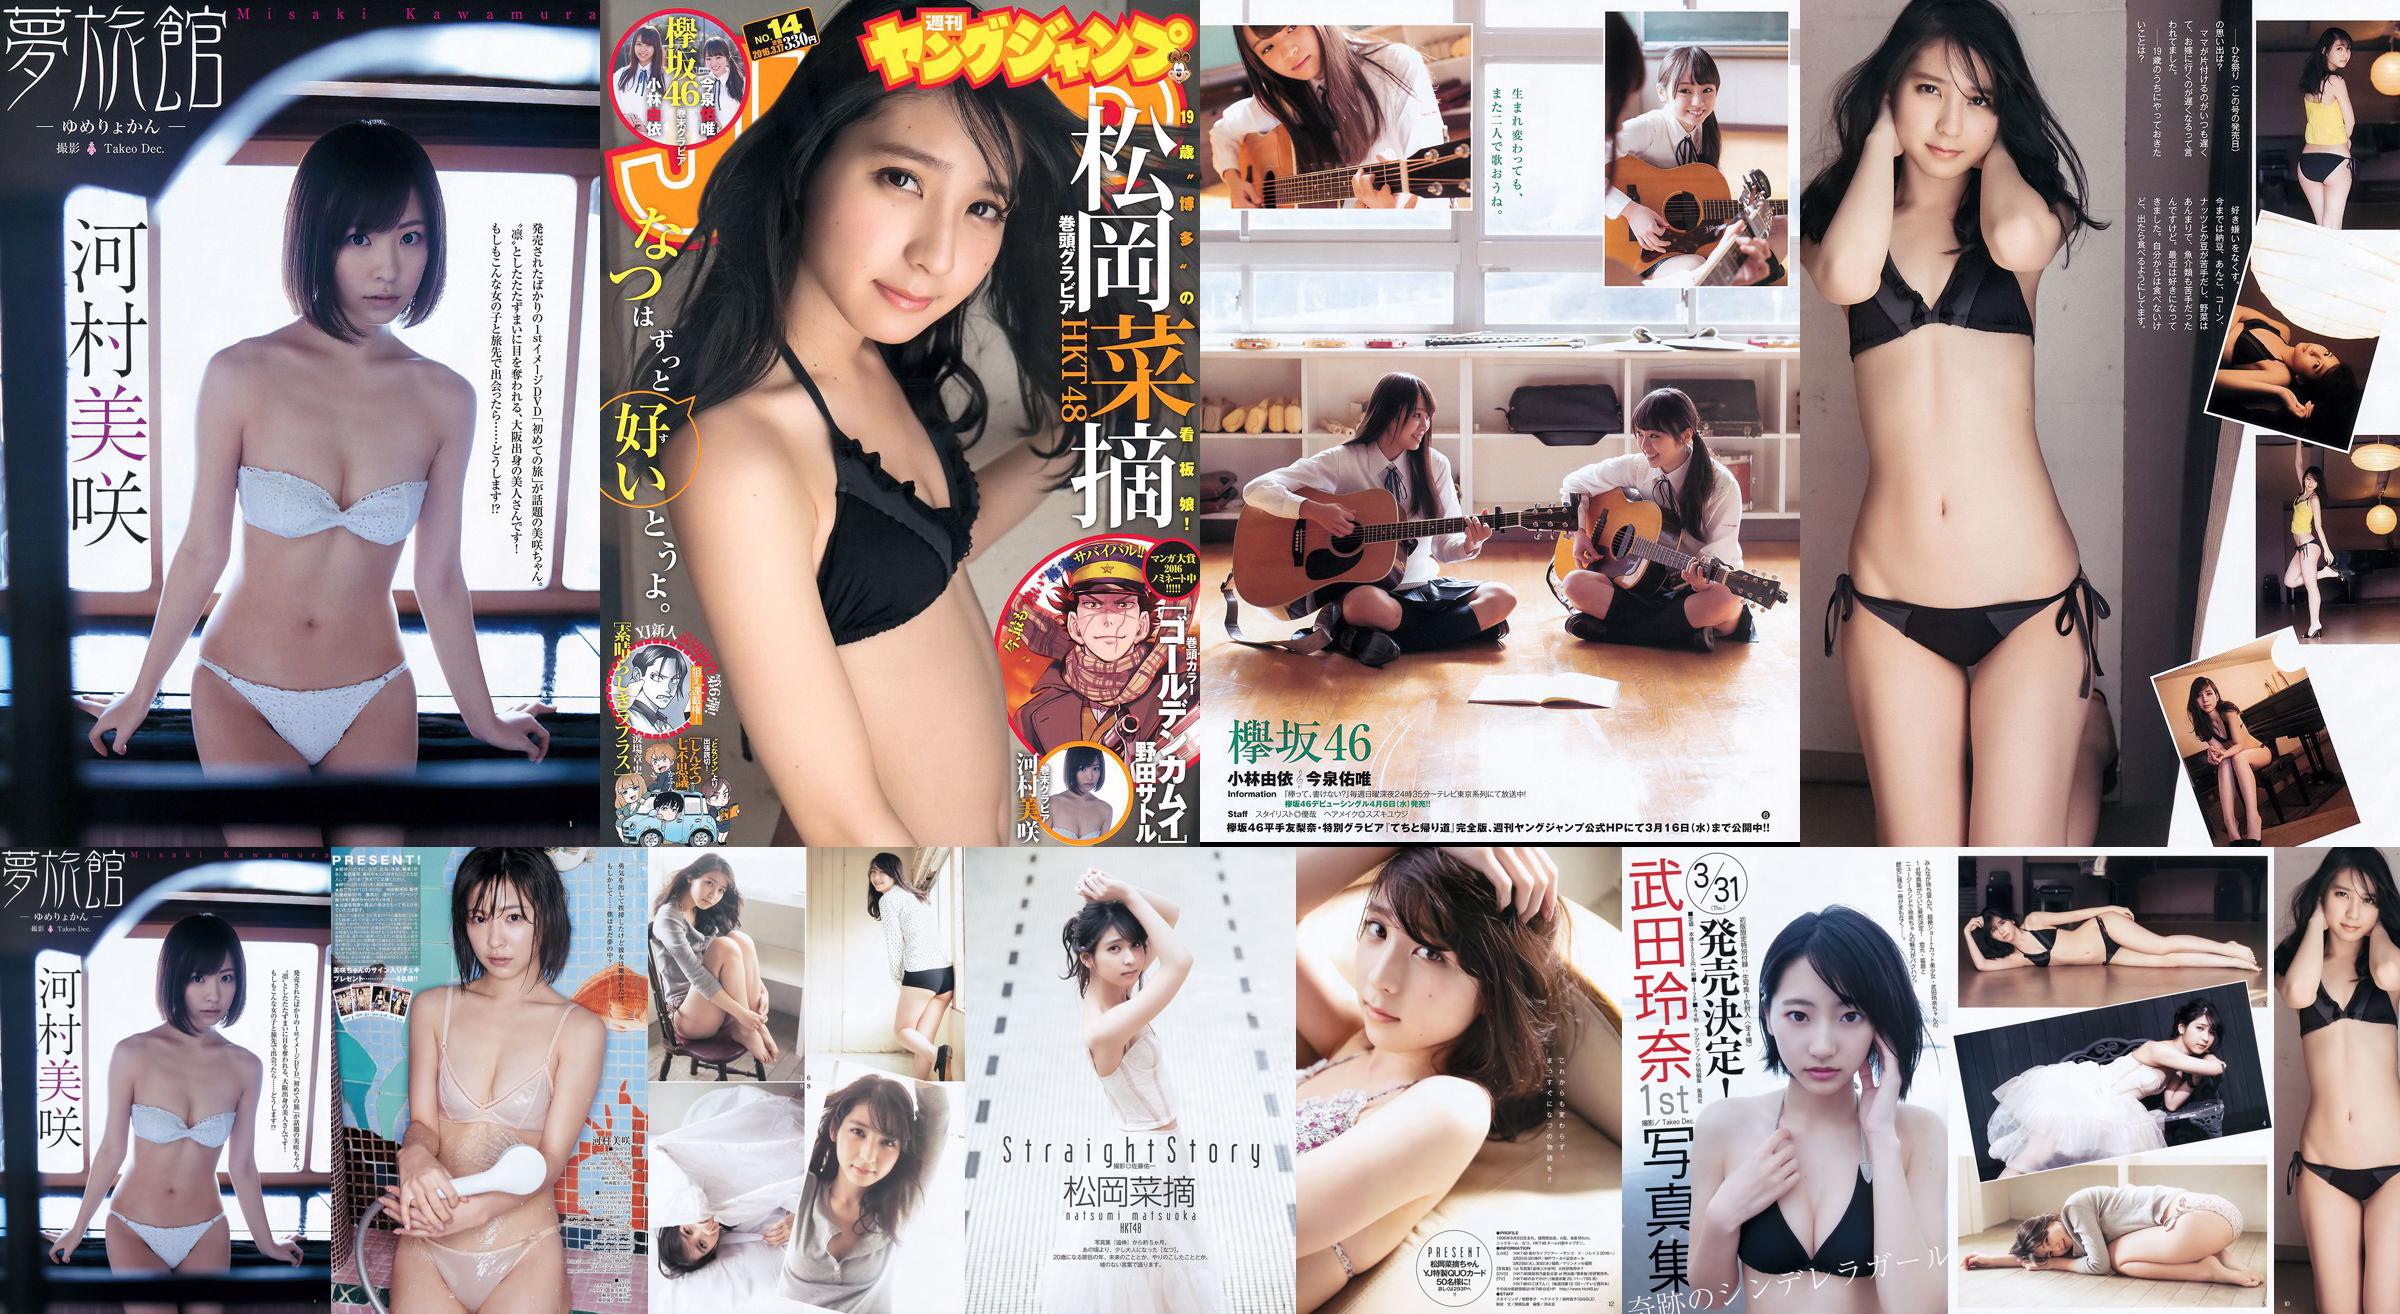 Pilihan Sayur Muraoka Yui Kobayashi Yui Imaizumi Misaki Kawamura [Lompat Muda Mingguan] Majalah Foto No. 14 2016 No.e8afcc Halaman 4